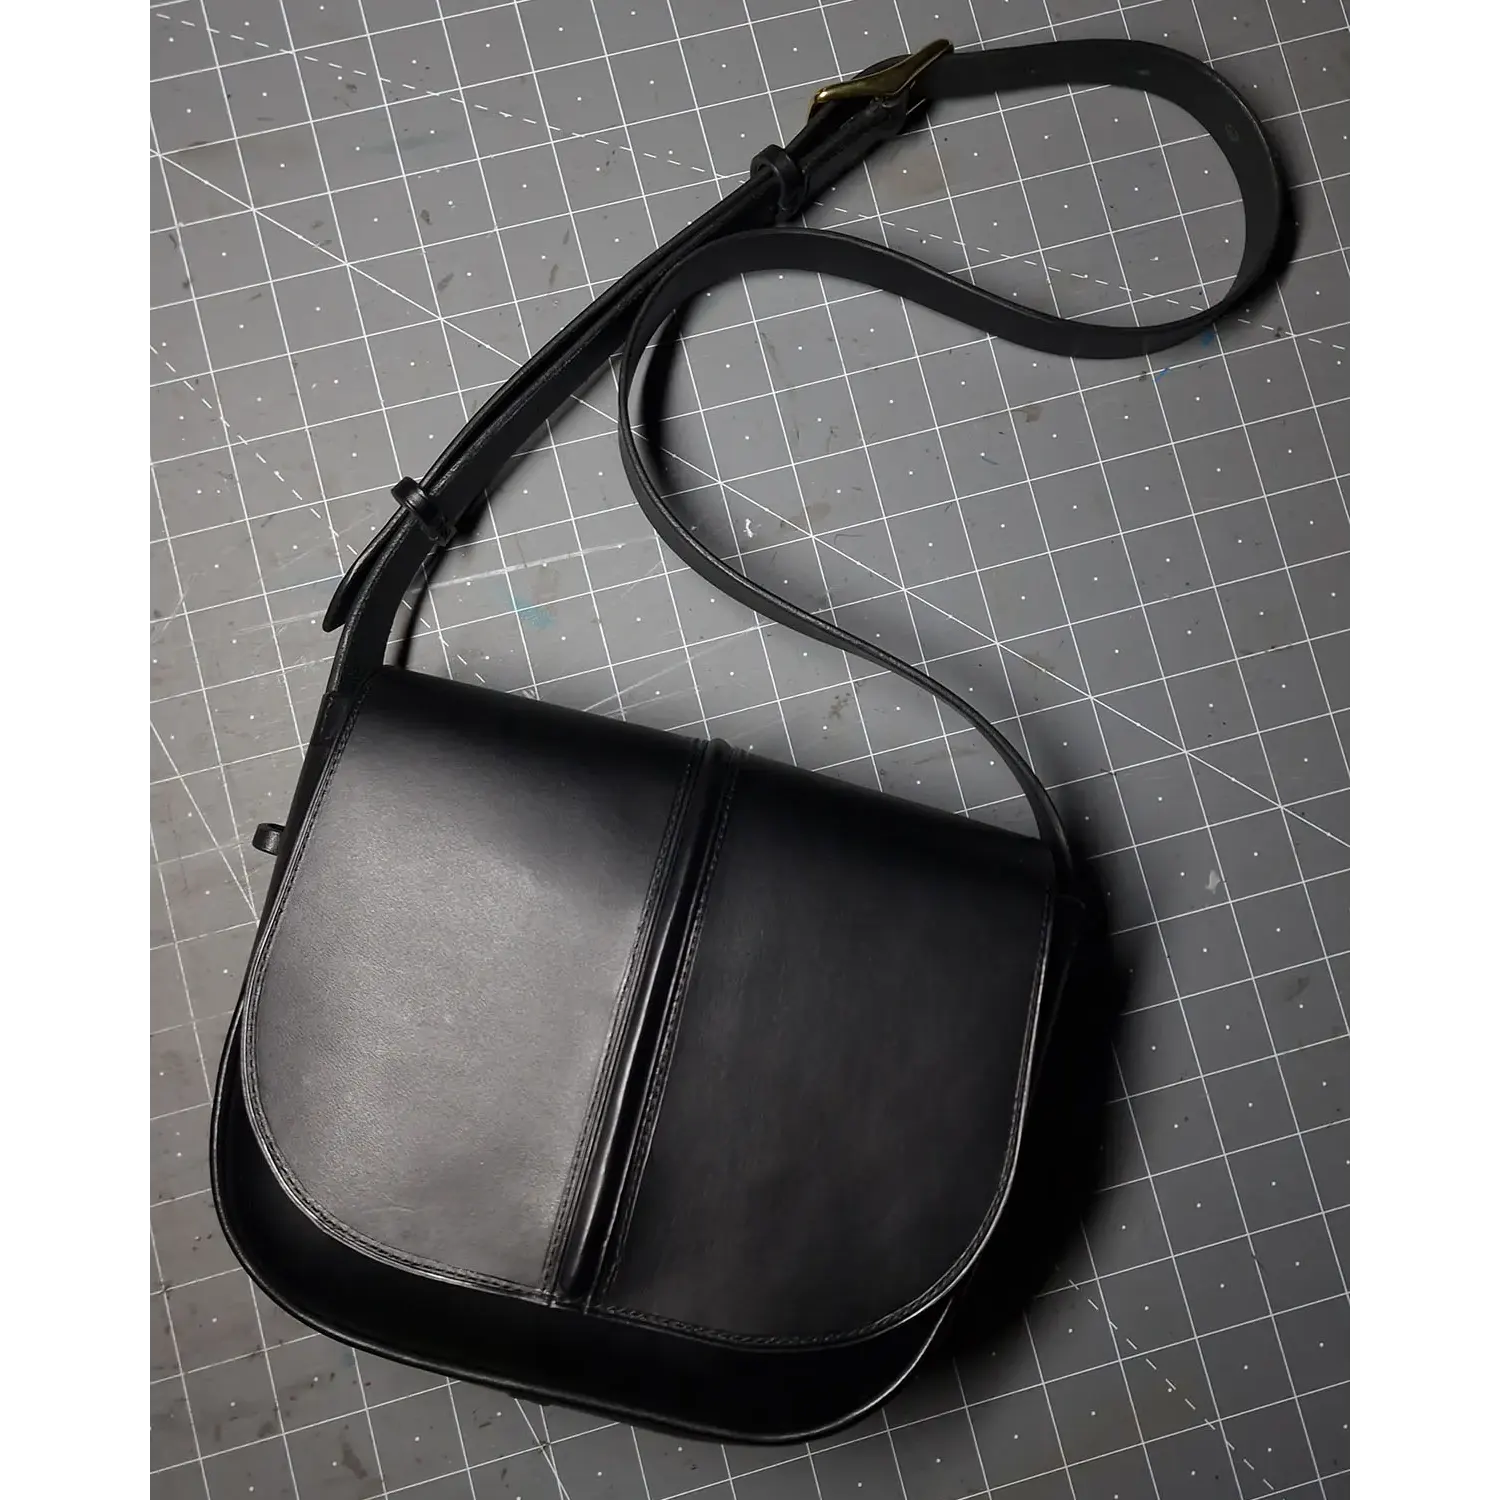 possala designs black leather italian vegetable tanned cartridge bag cute handmade in asturias